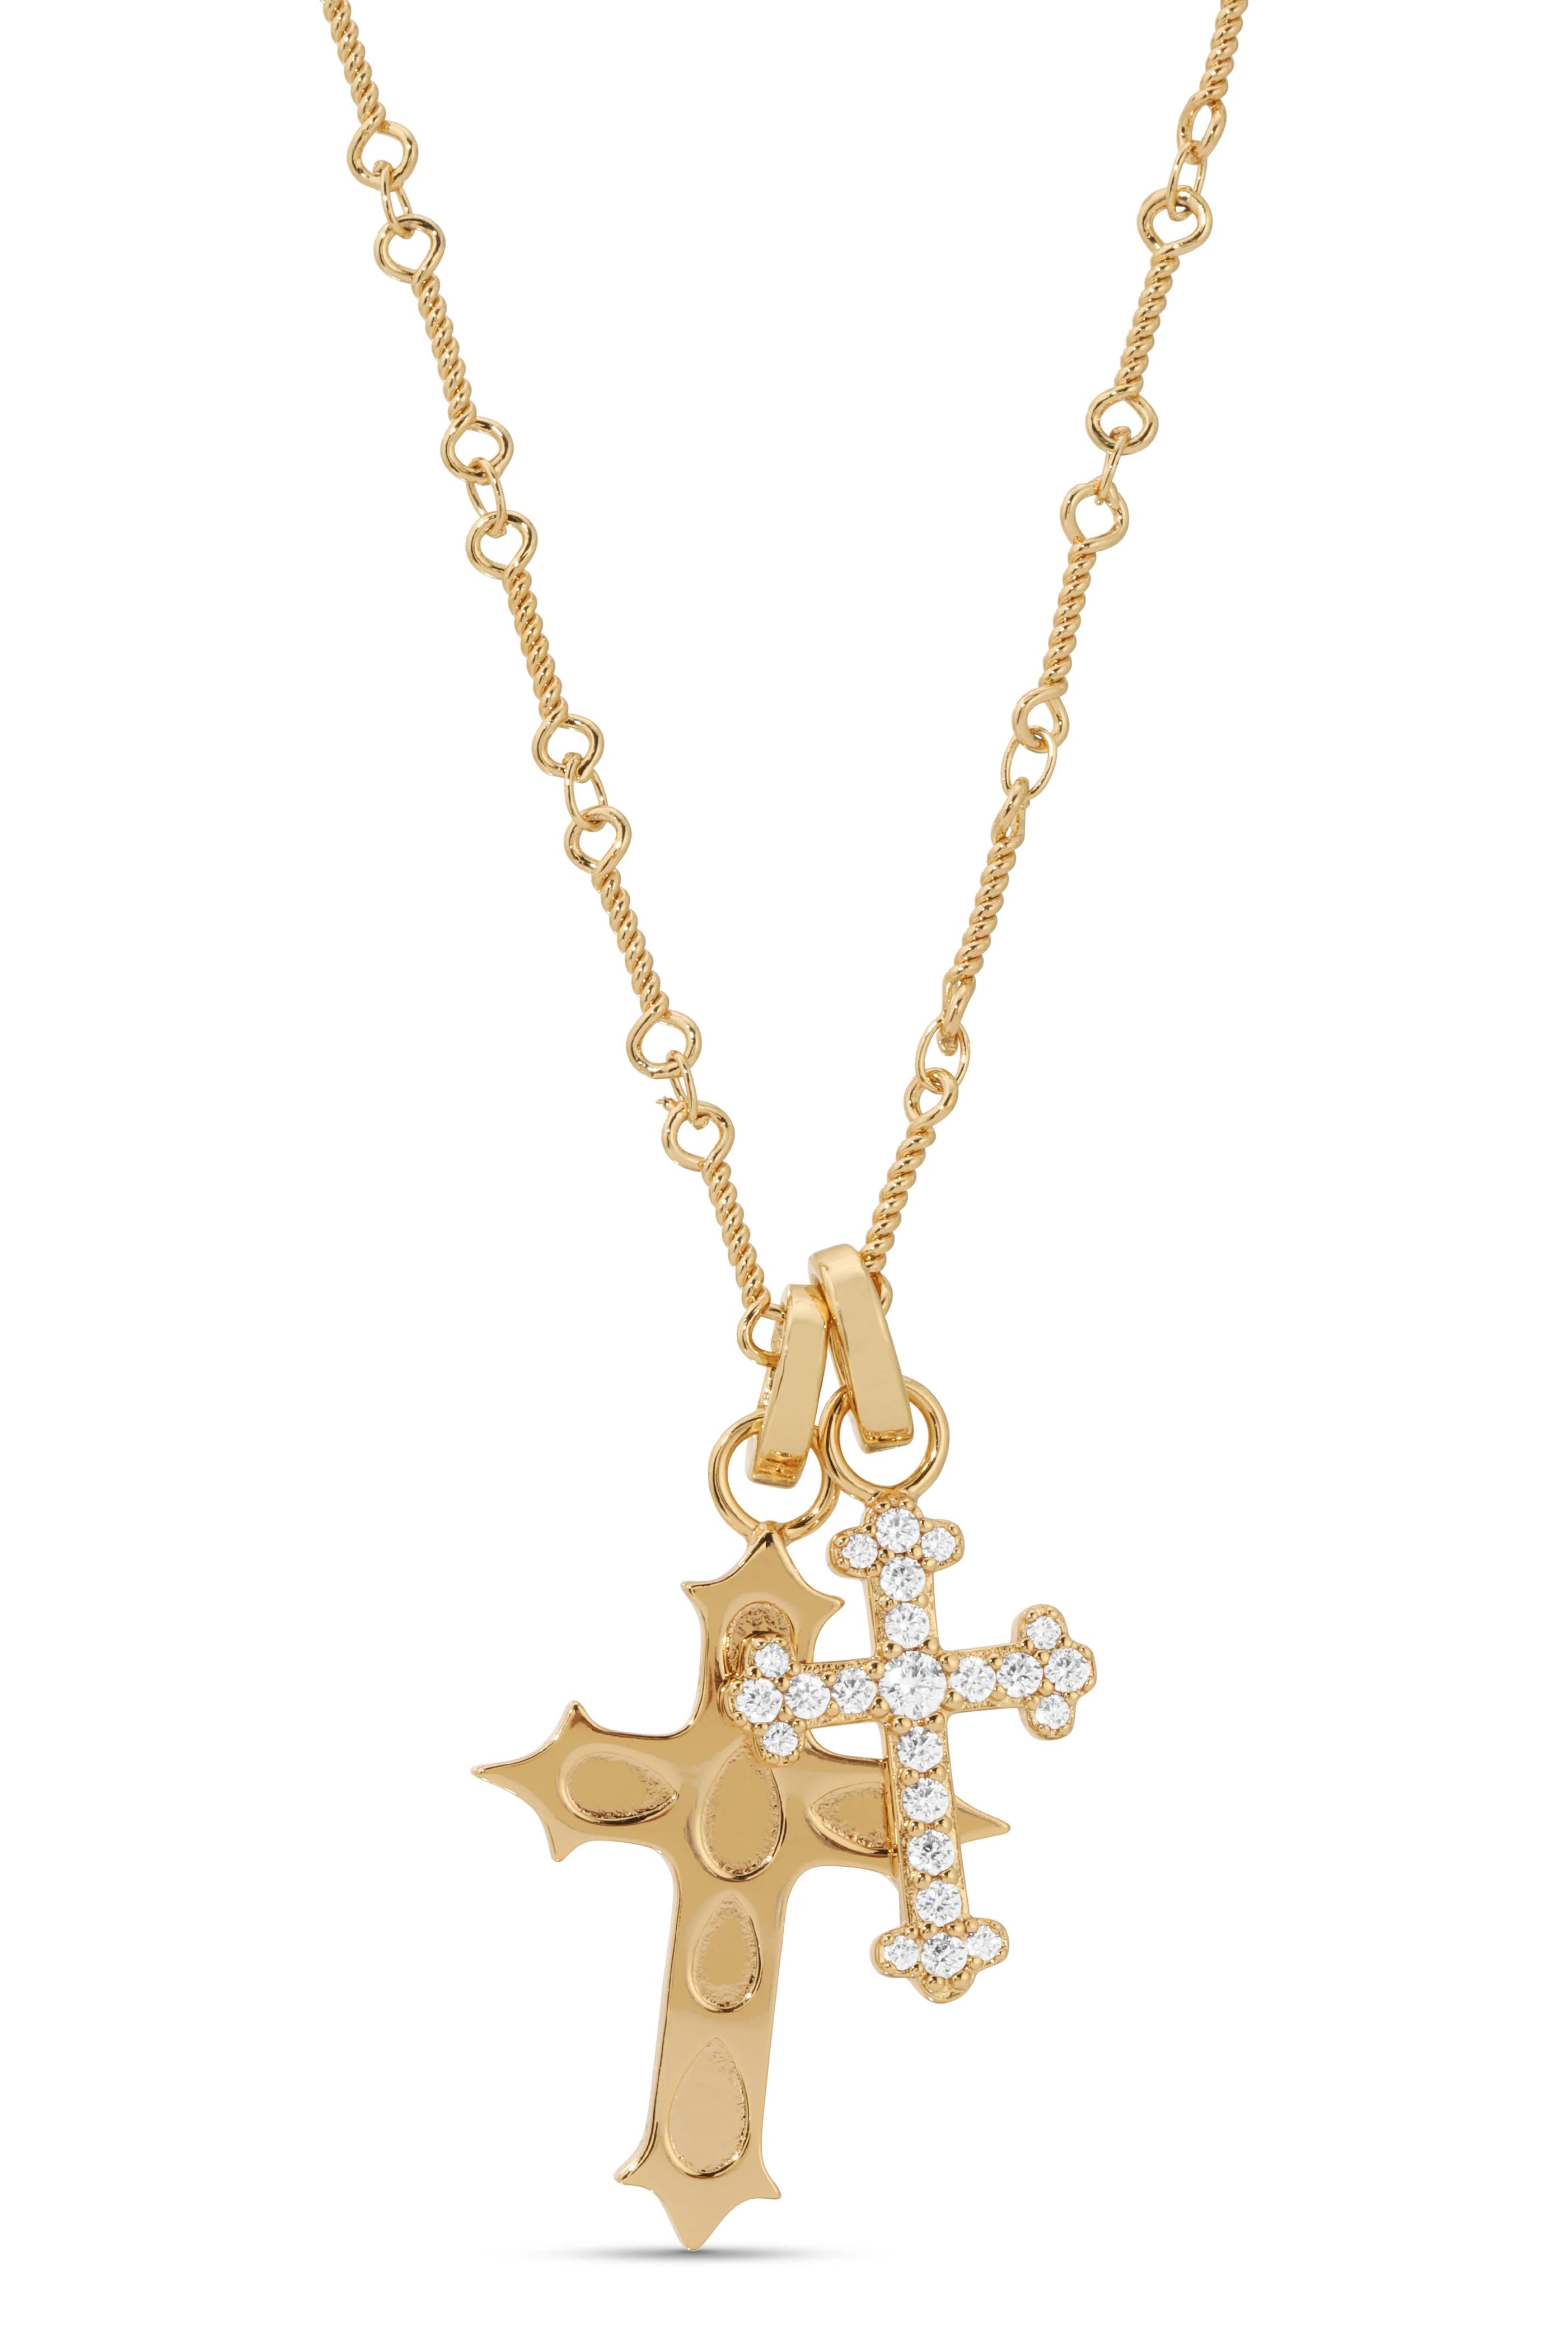 Double Cross Necklace | Lili Claspe